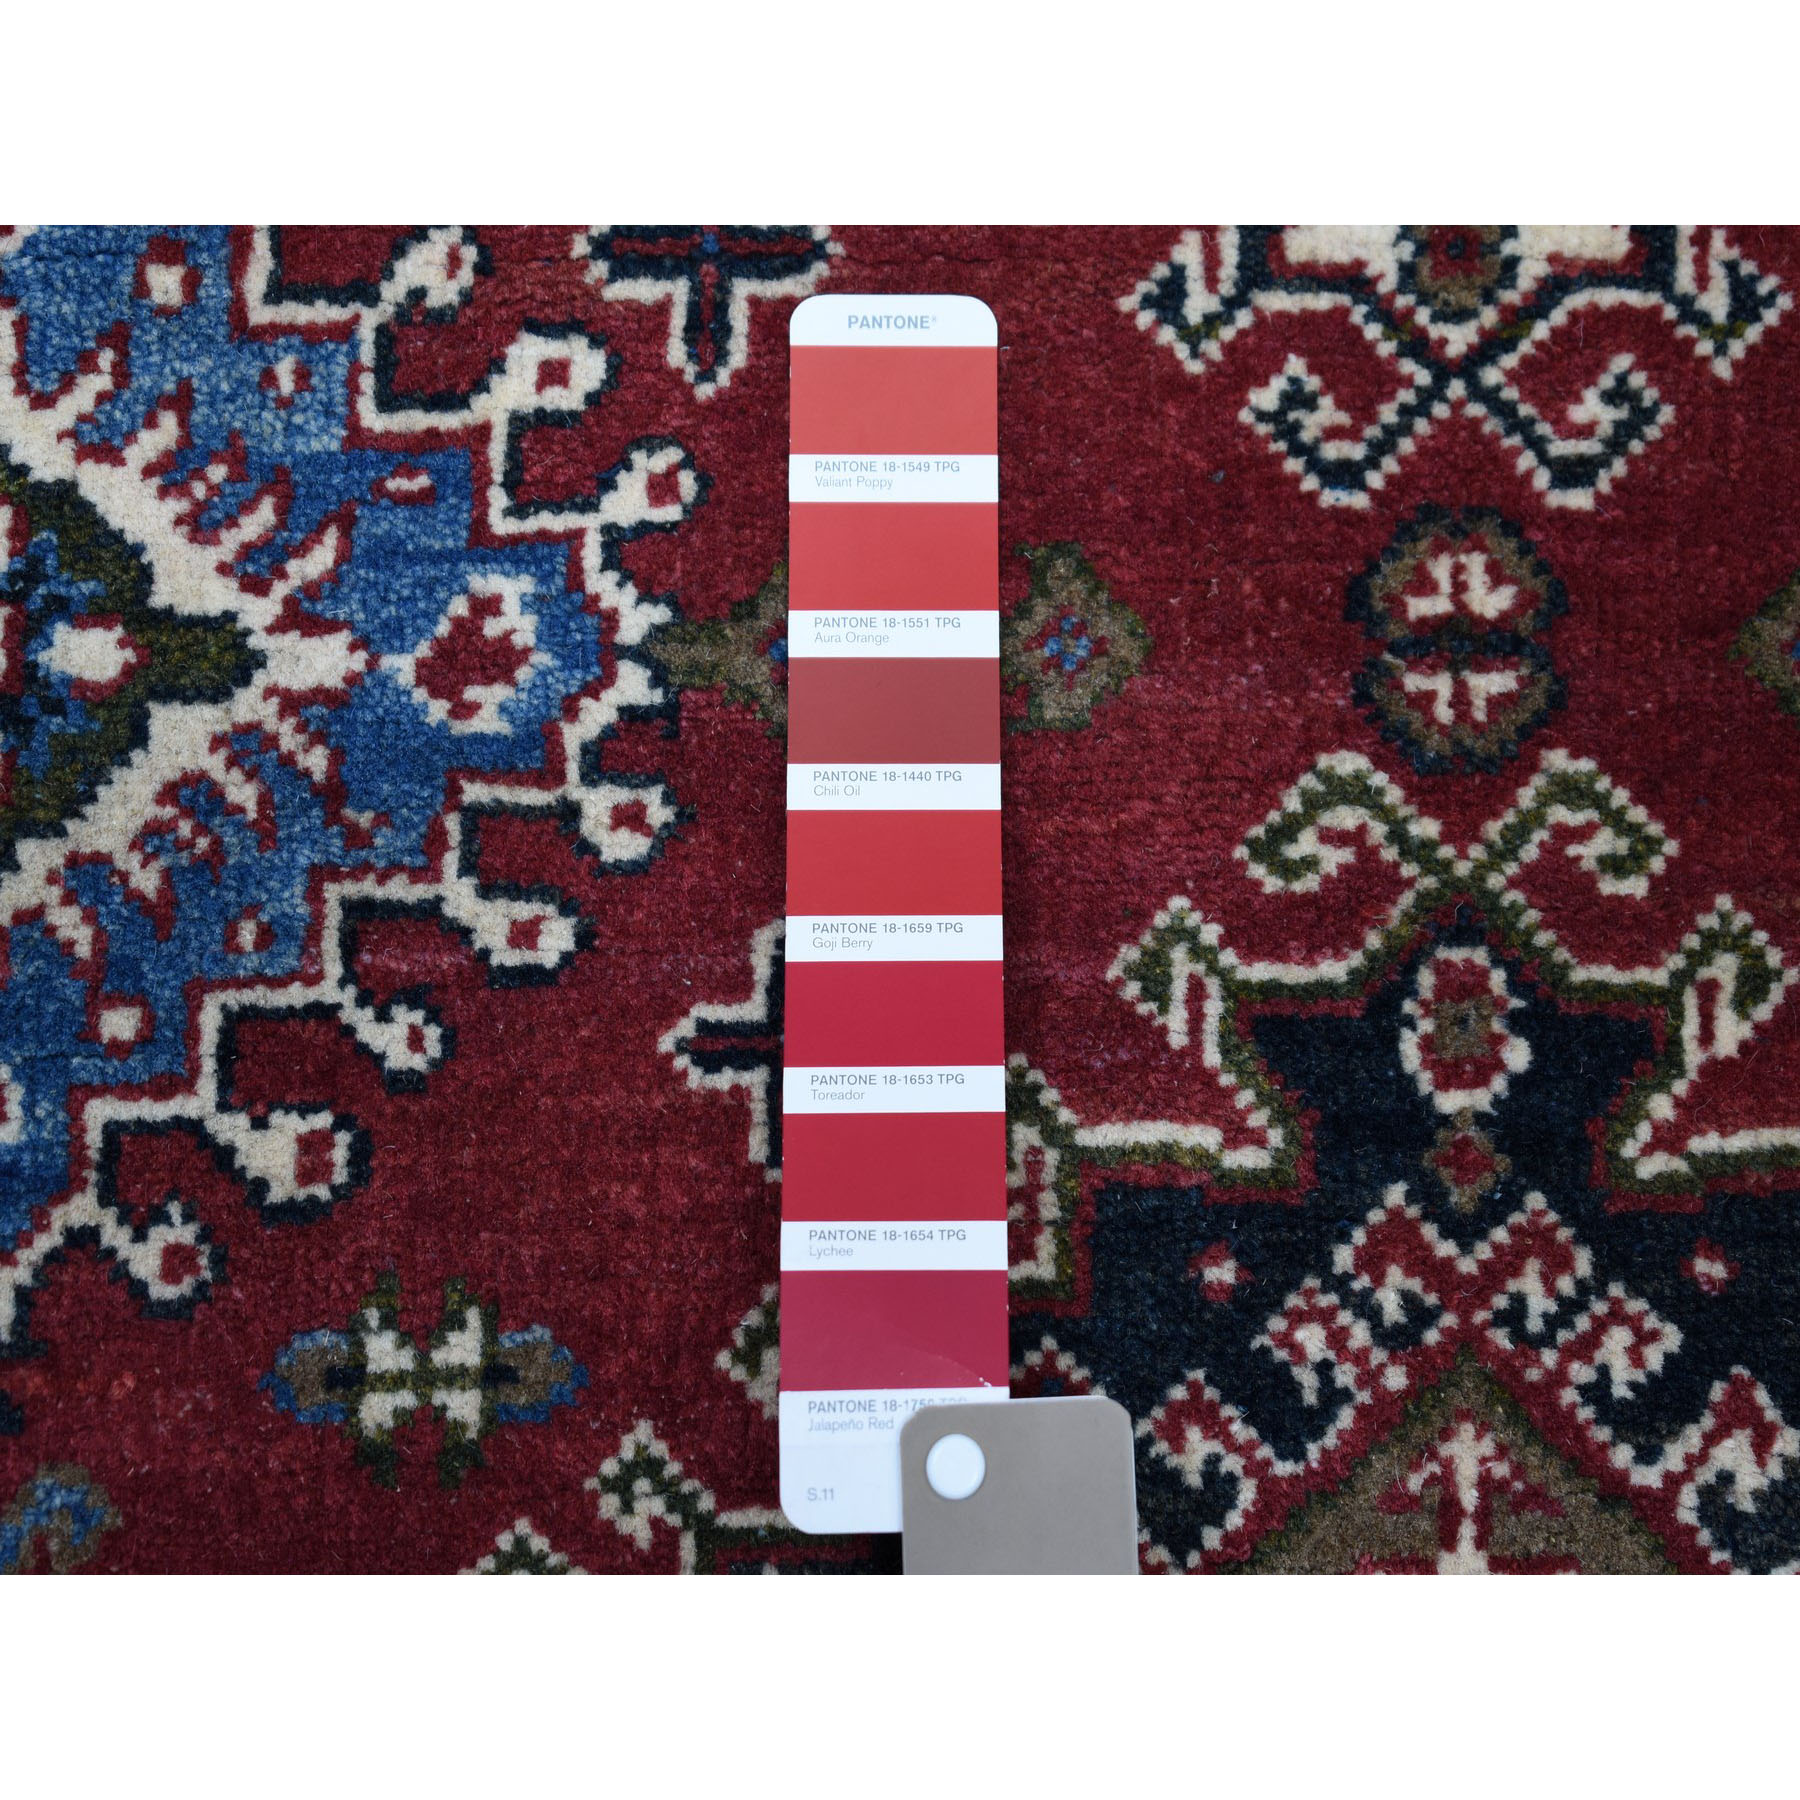 5-x6-10  Red Geometric Design Kazak Pure Wool Hand-Knotted Oriental Rug 